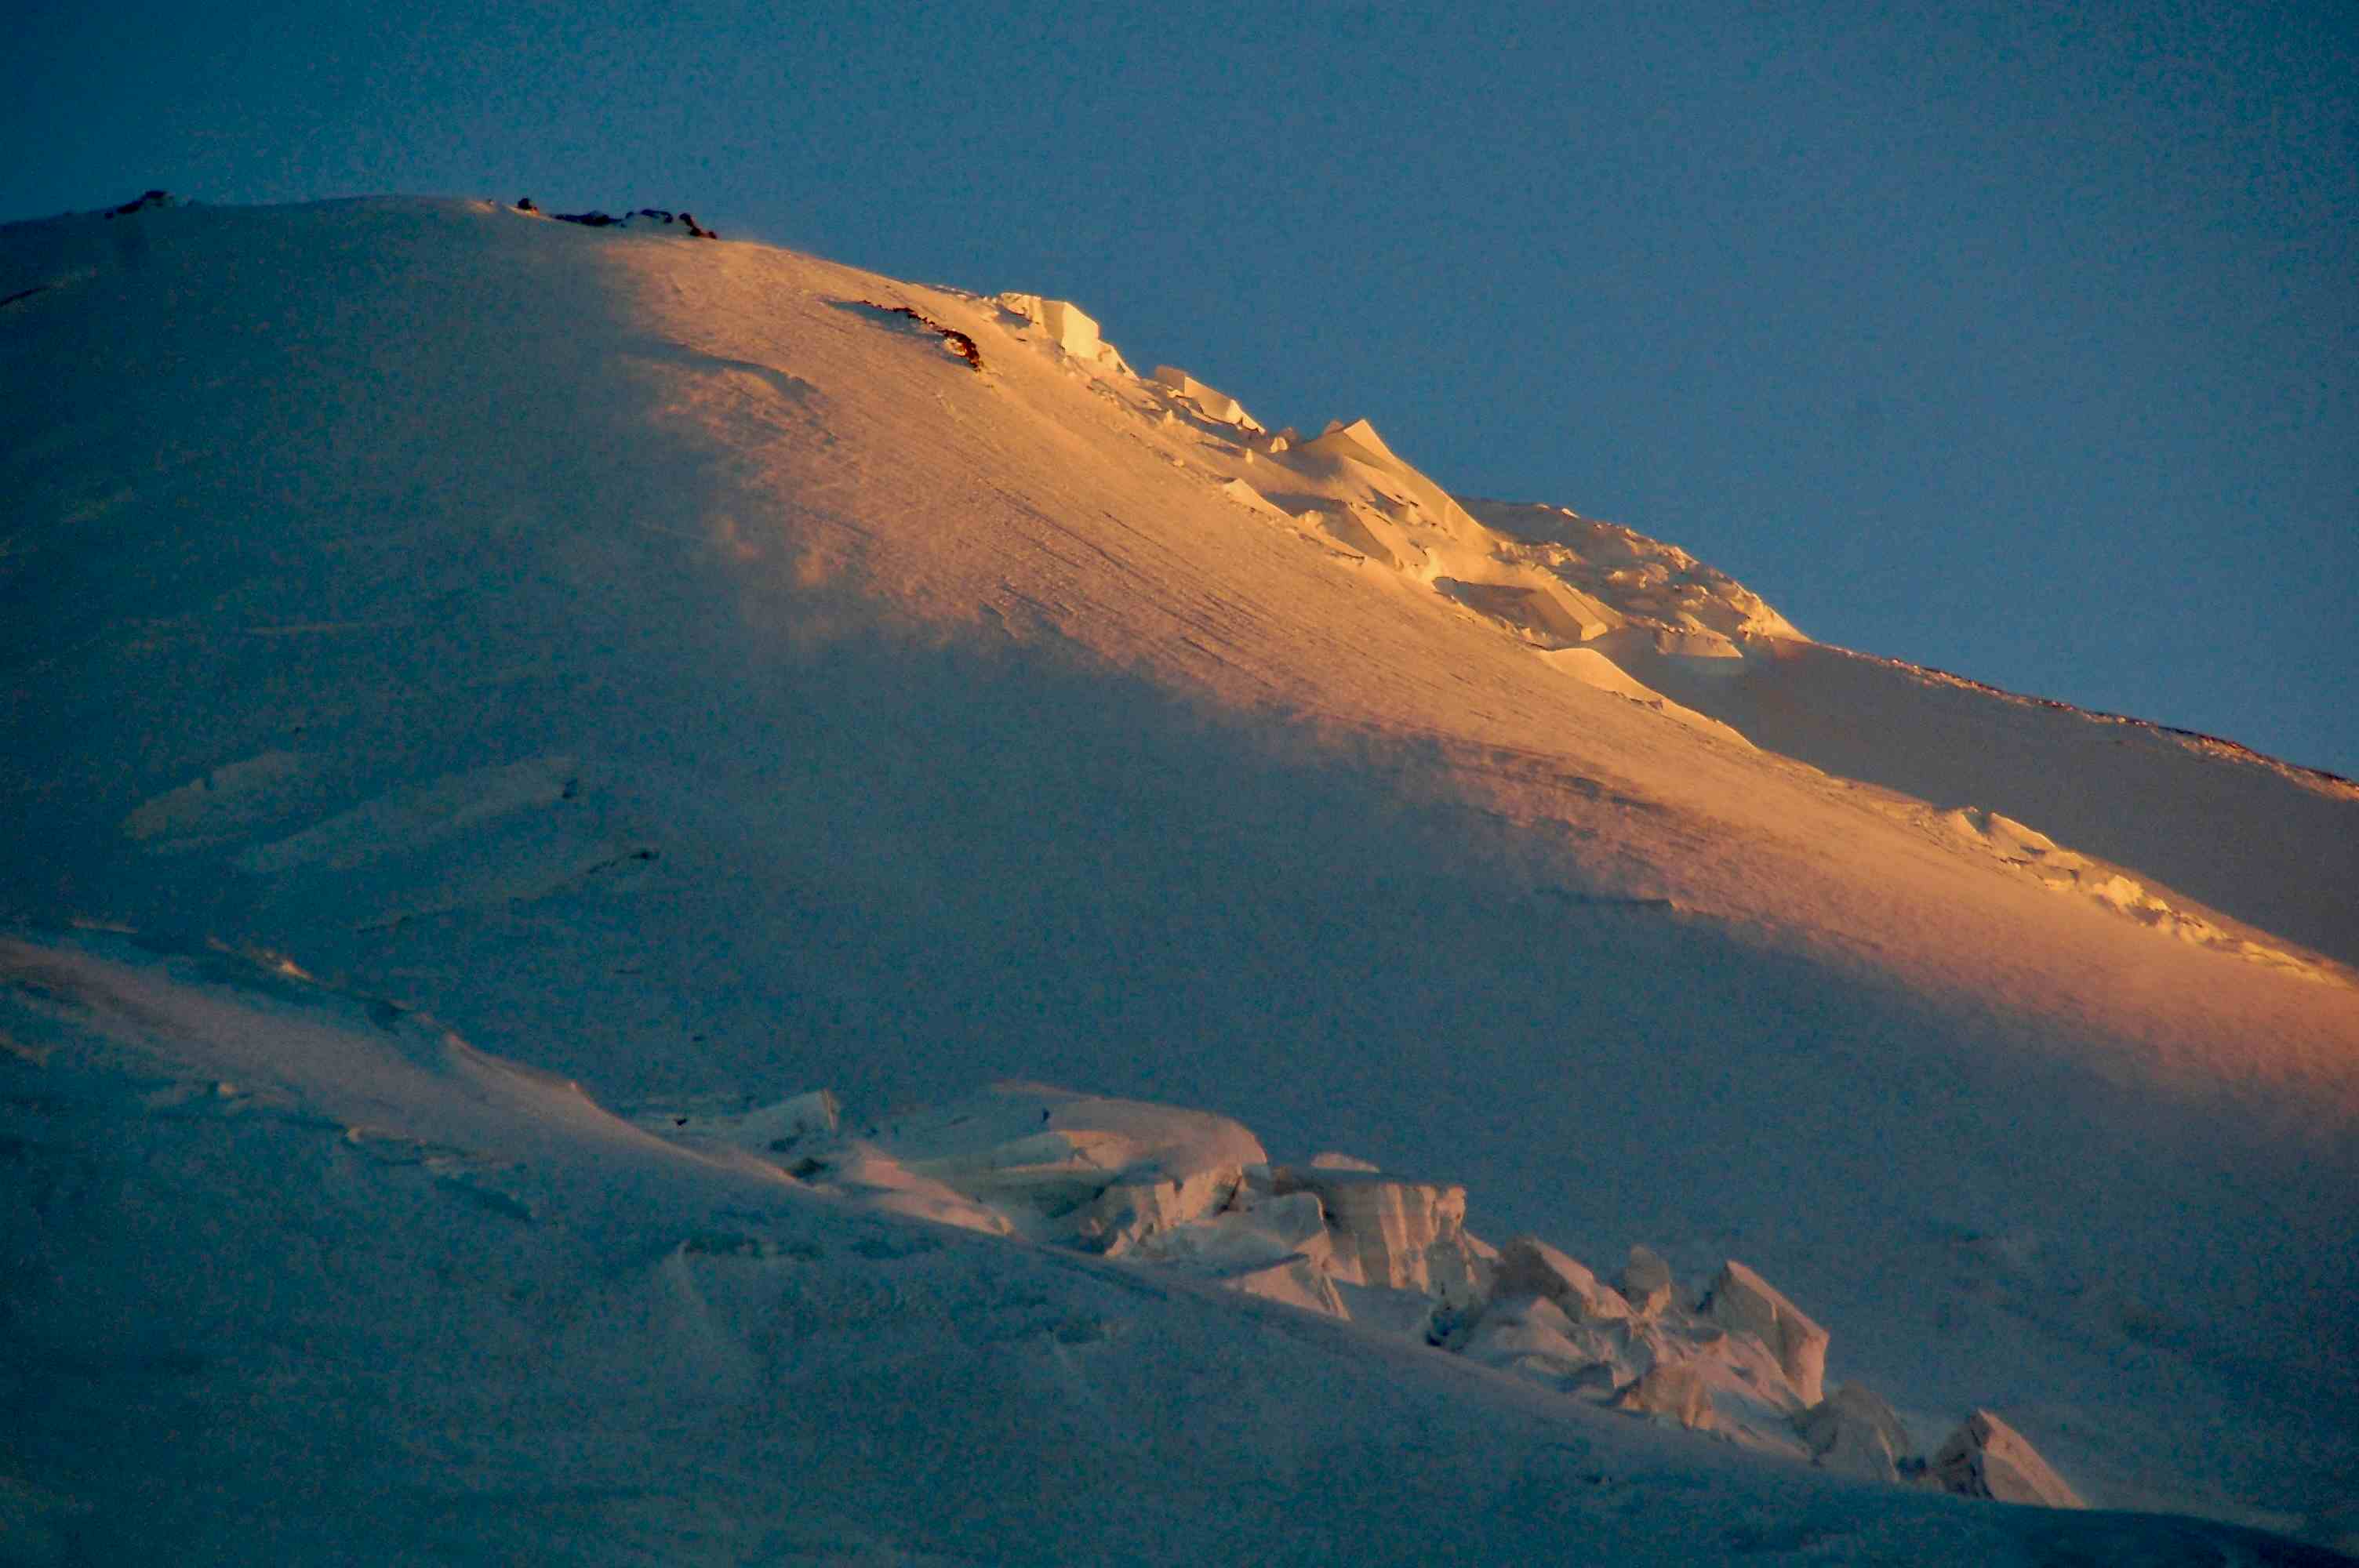 Elbrus Westgipfel am Abend